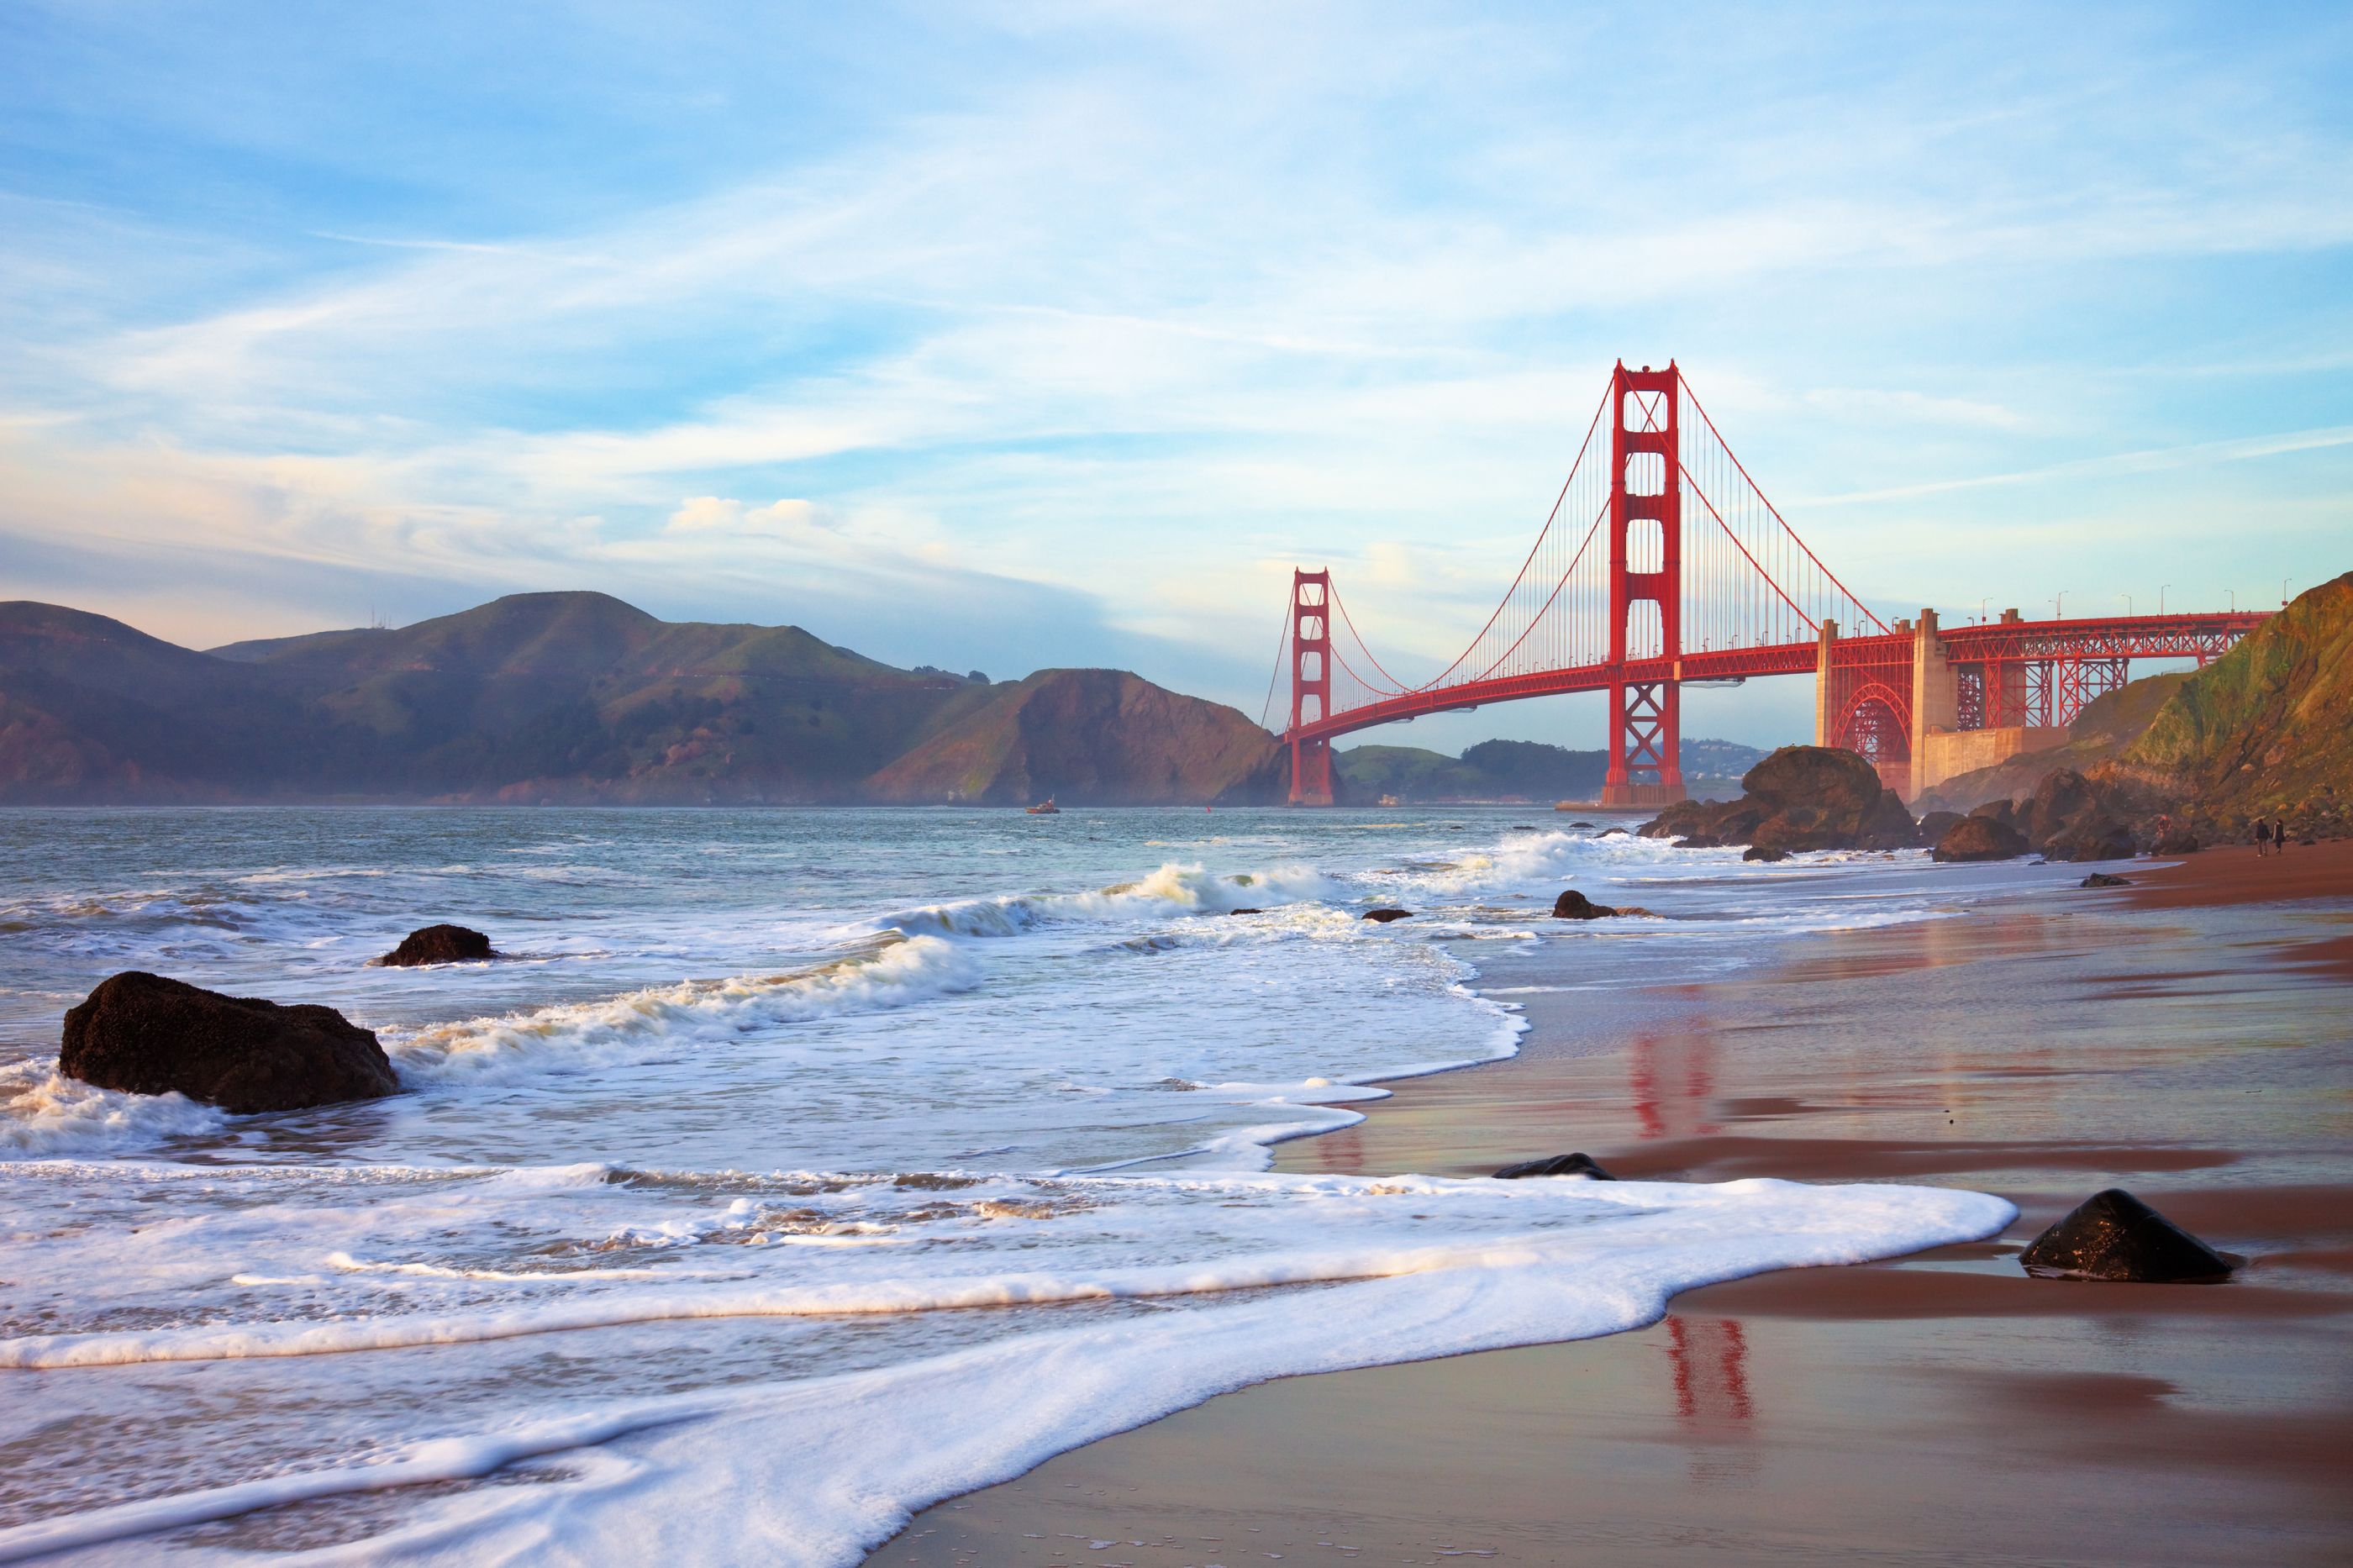 The Golden Gate Bridge in San Francisco, California USA